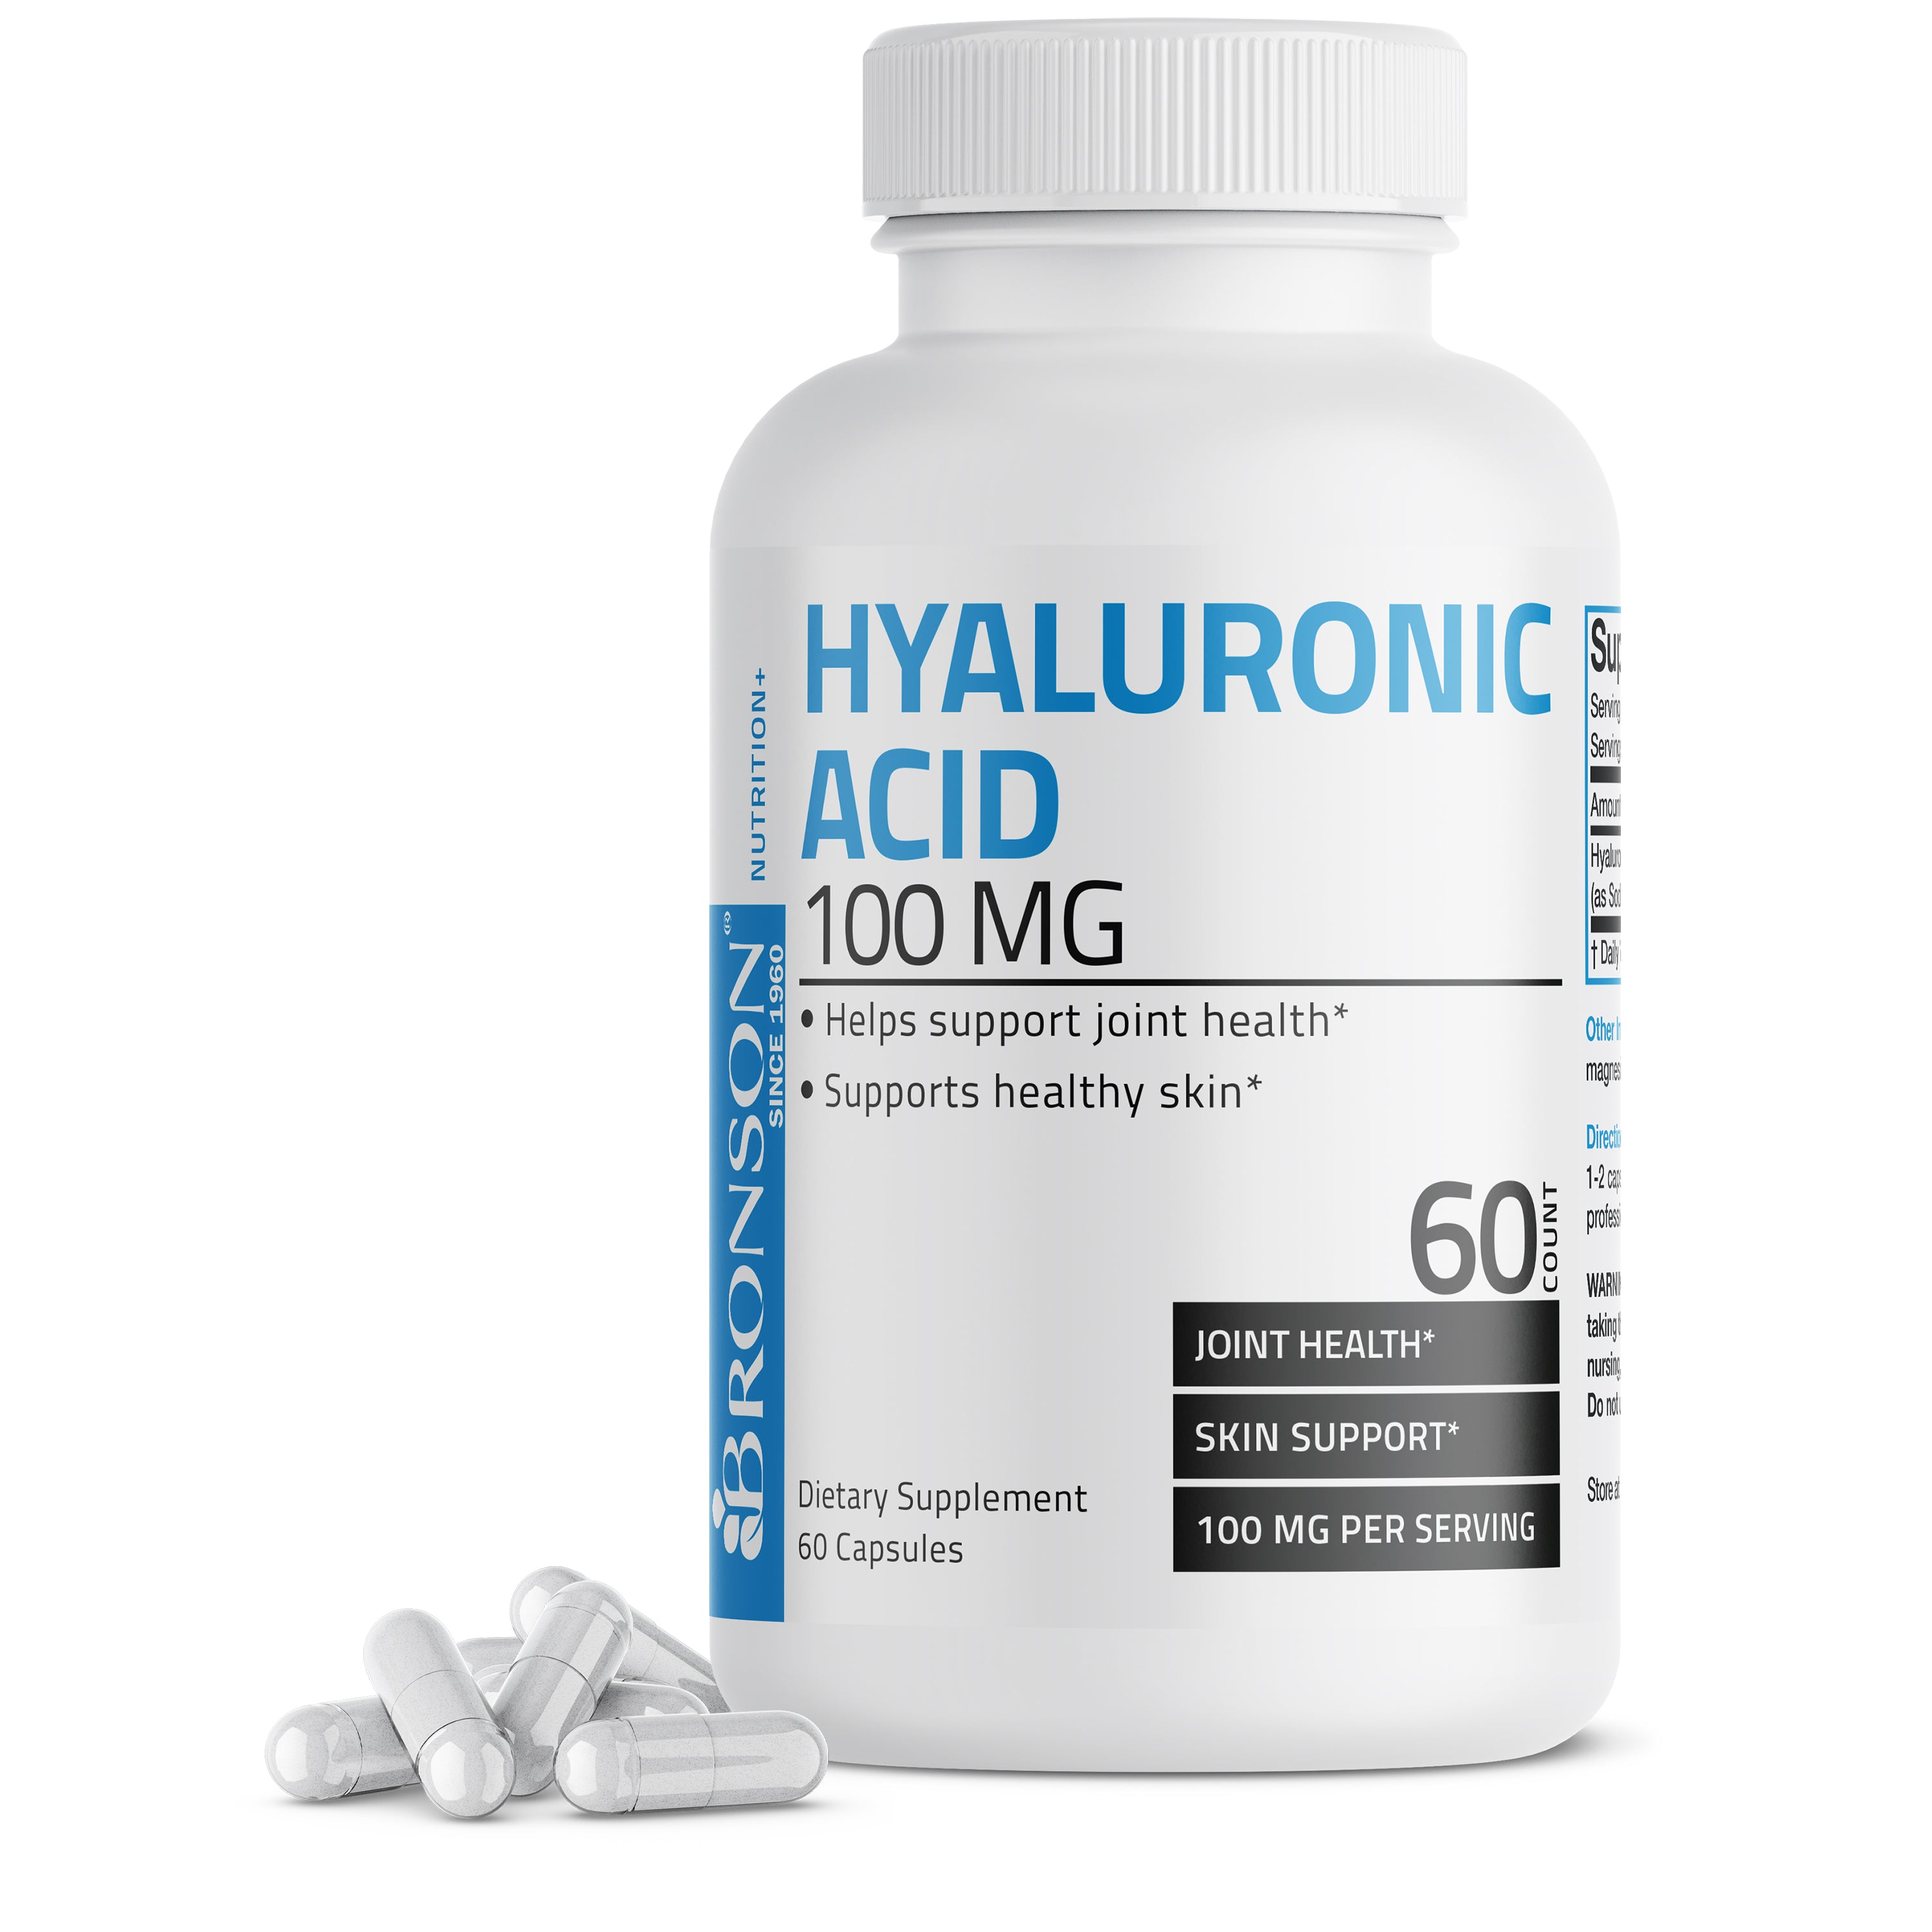 Hyaluronic Acid - 100 mg (Per 2 Capsules)